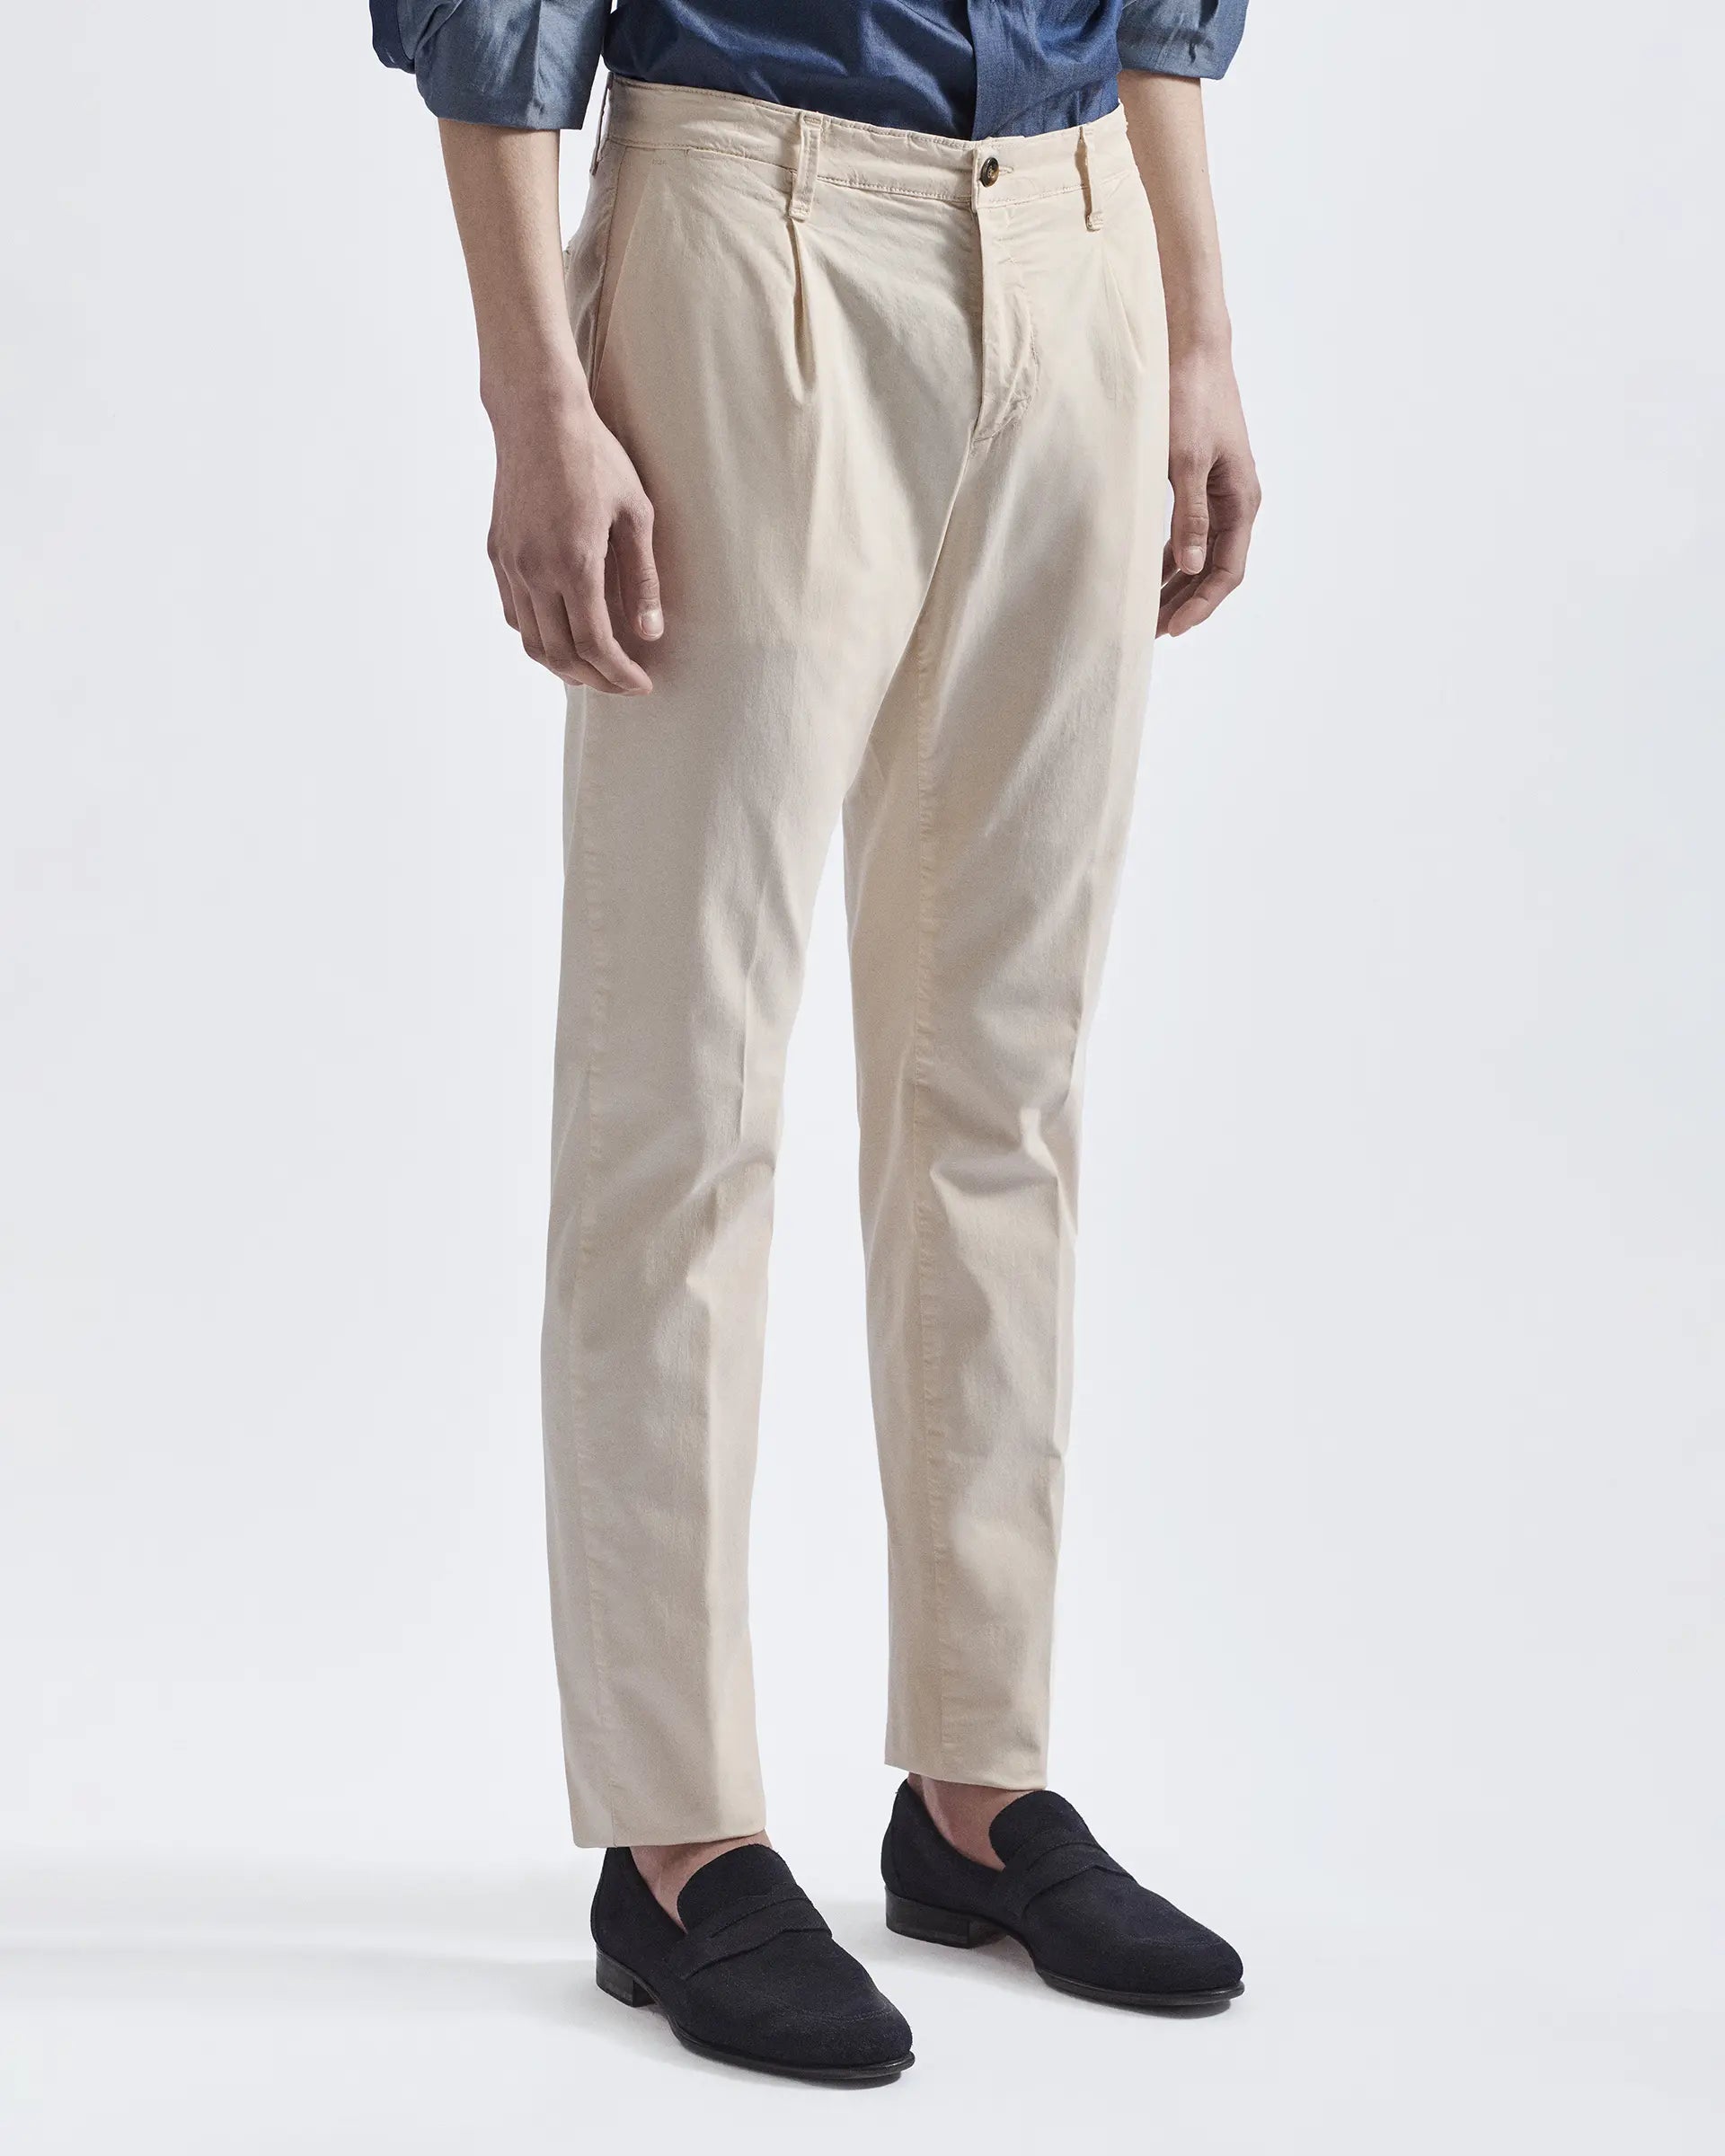 White 1 Pleats Tencel and Cotton Stretch Pants